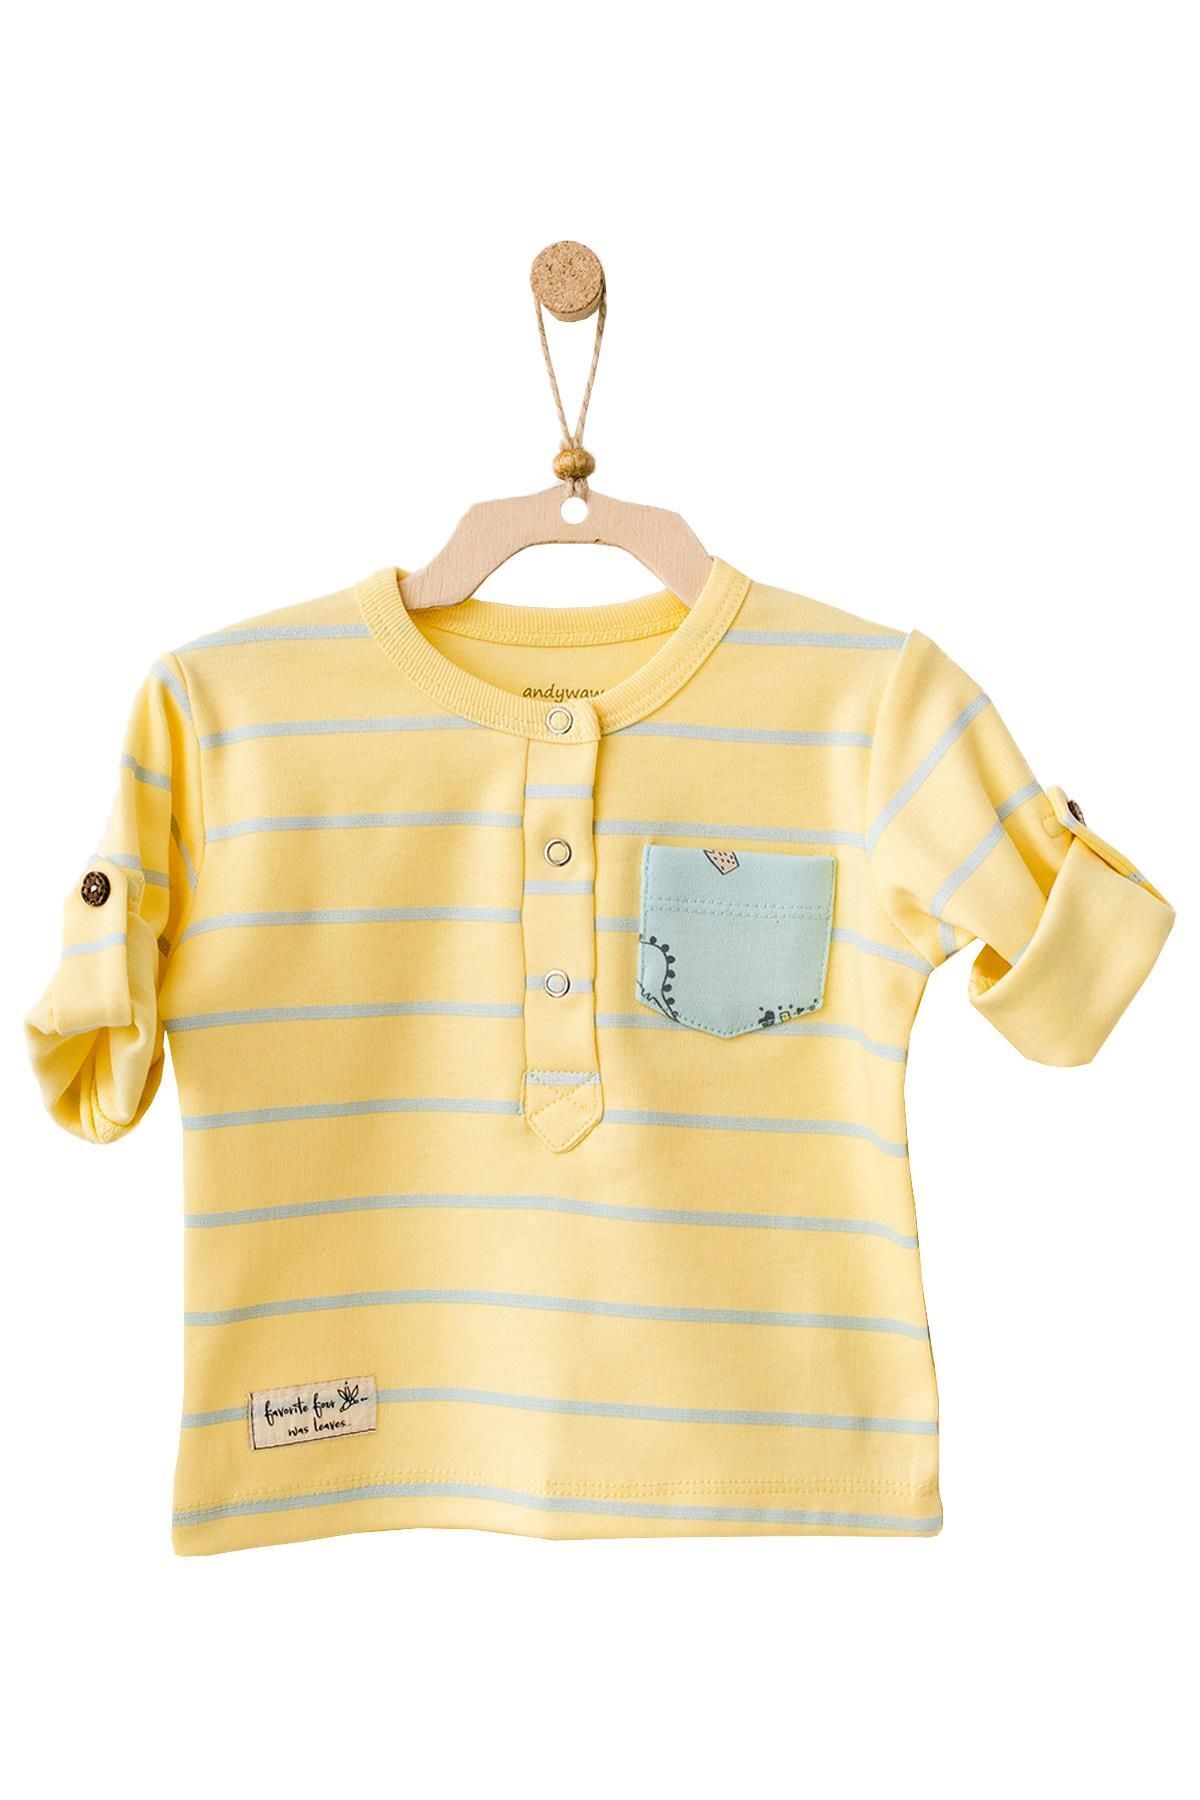 Andy Wawa Erkek Bebek Cepli Sarı Tişört Ac21510r